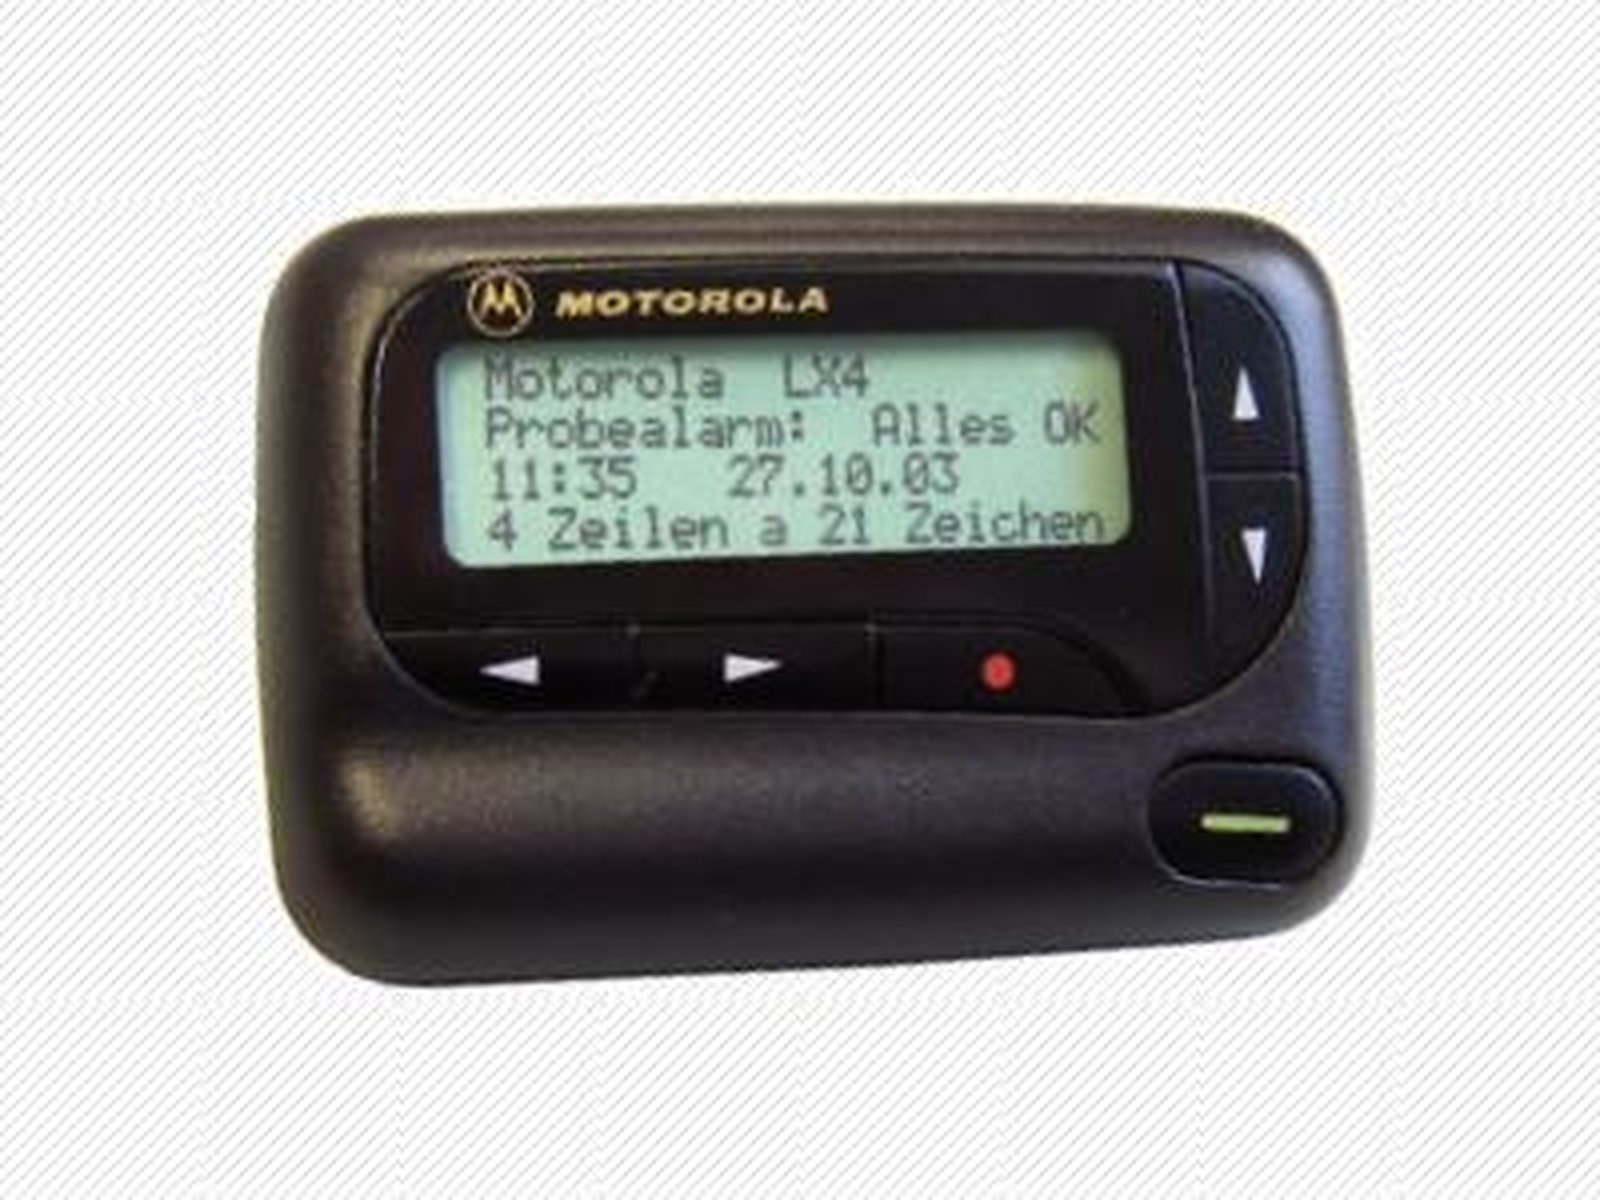 Motorola LX4 plus